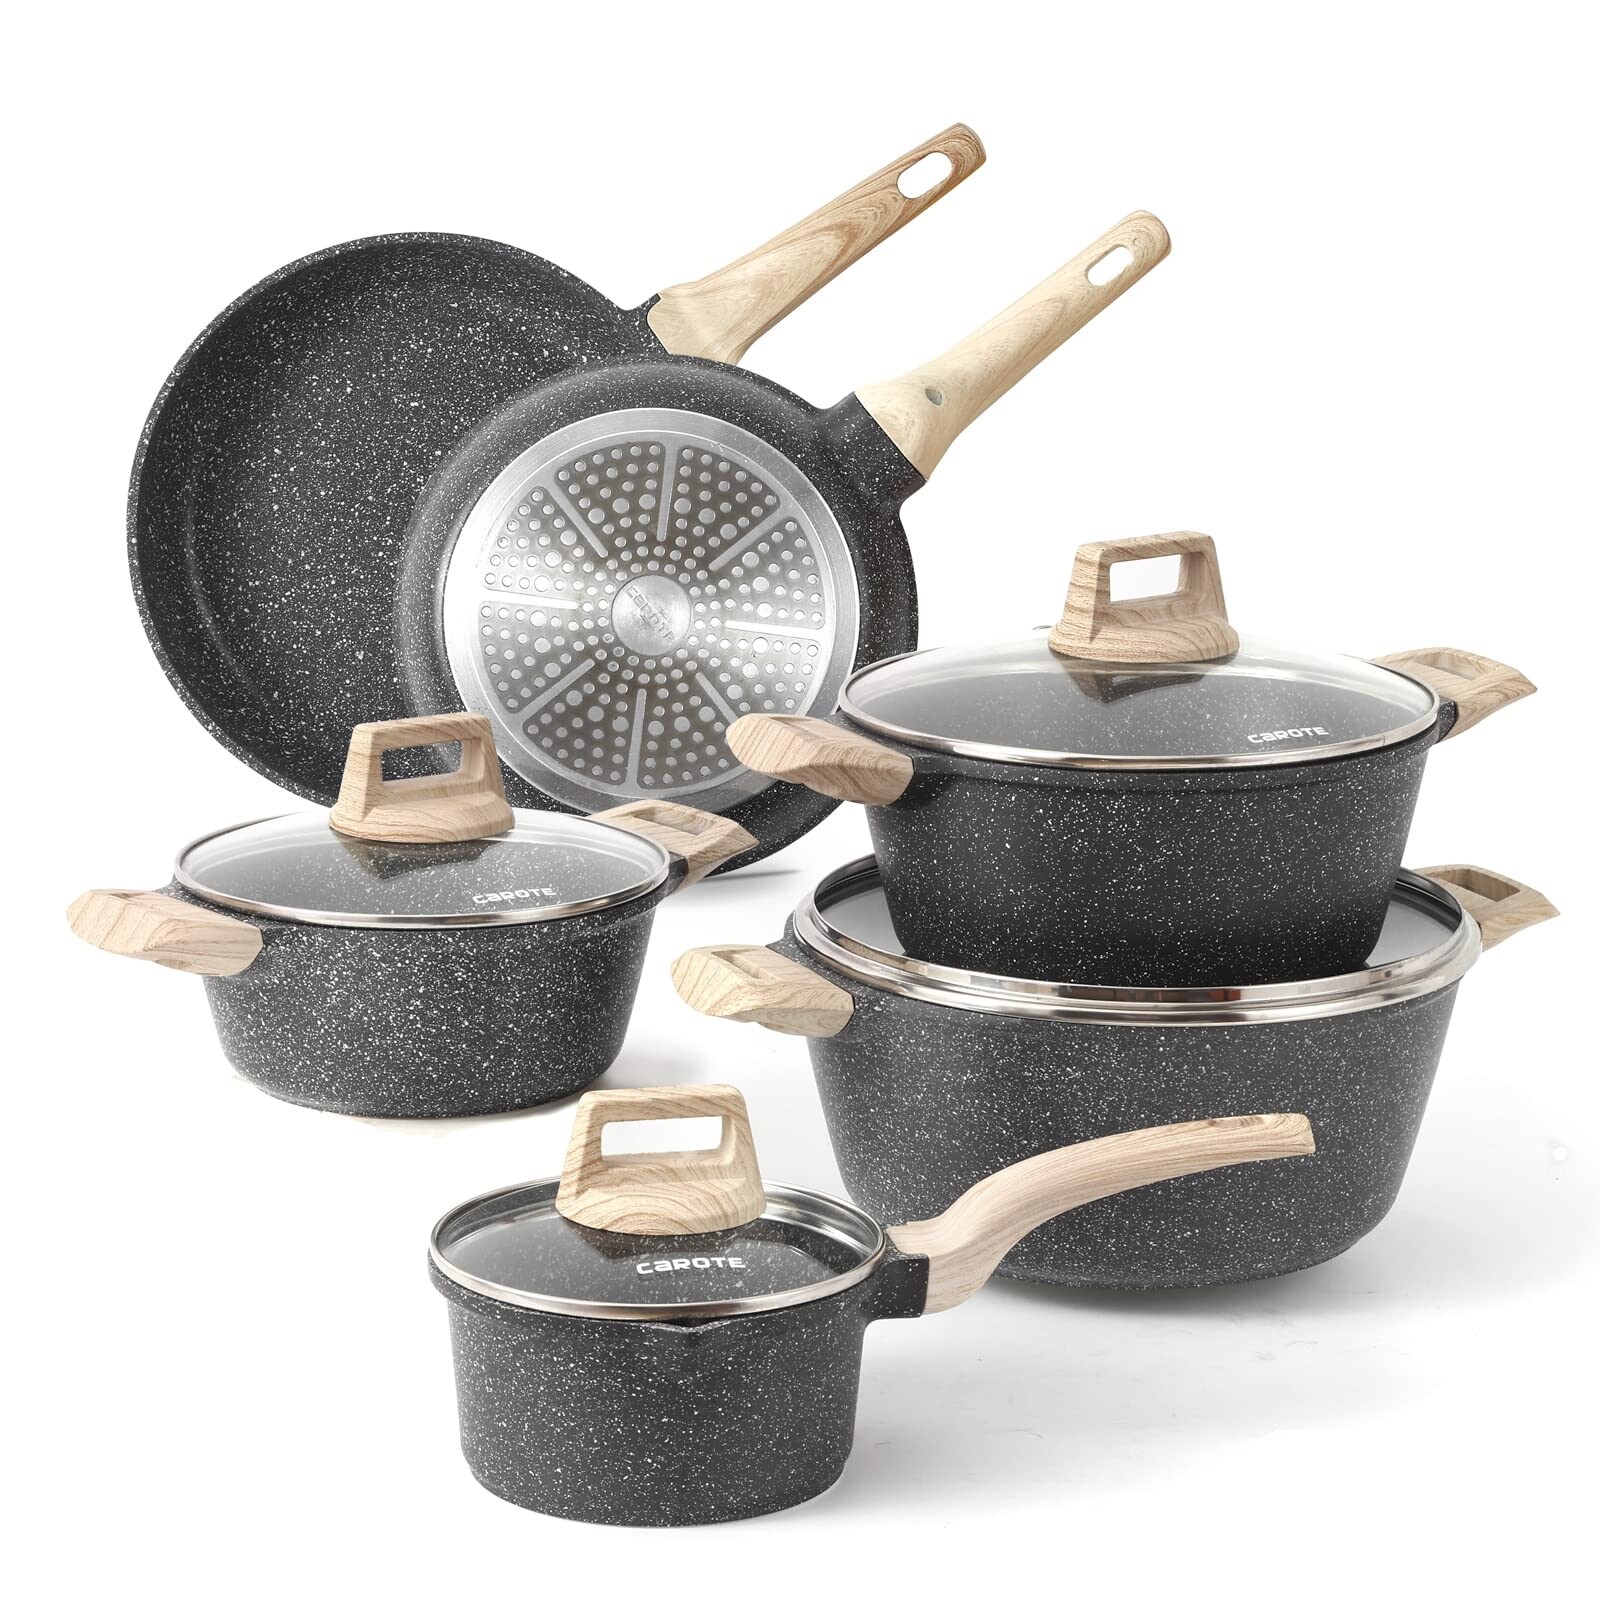 https://ak1.ostkcdn.com/images/products/is/images/direct/acb05286f3076cb74ea2cd084f279f2c92a2e5f4/Pots-and-Pans-Set-Nonstick%2C-White-Granite-Induction-Kitchen-Cookware-Sets%2C-10-Pcs-Non-Stick-Cooking-Set-w-Frying-Pans-Saucepans.jpg